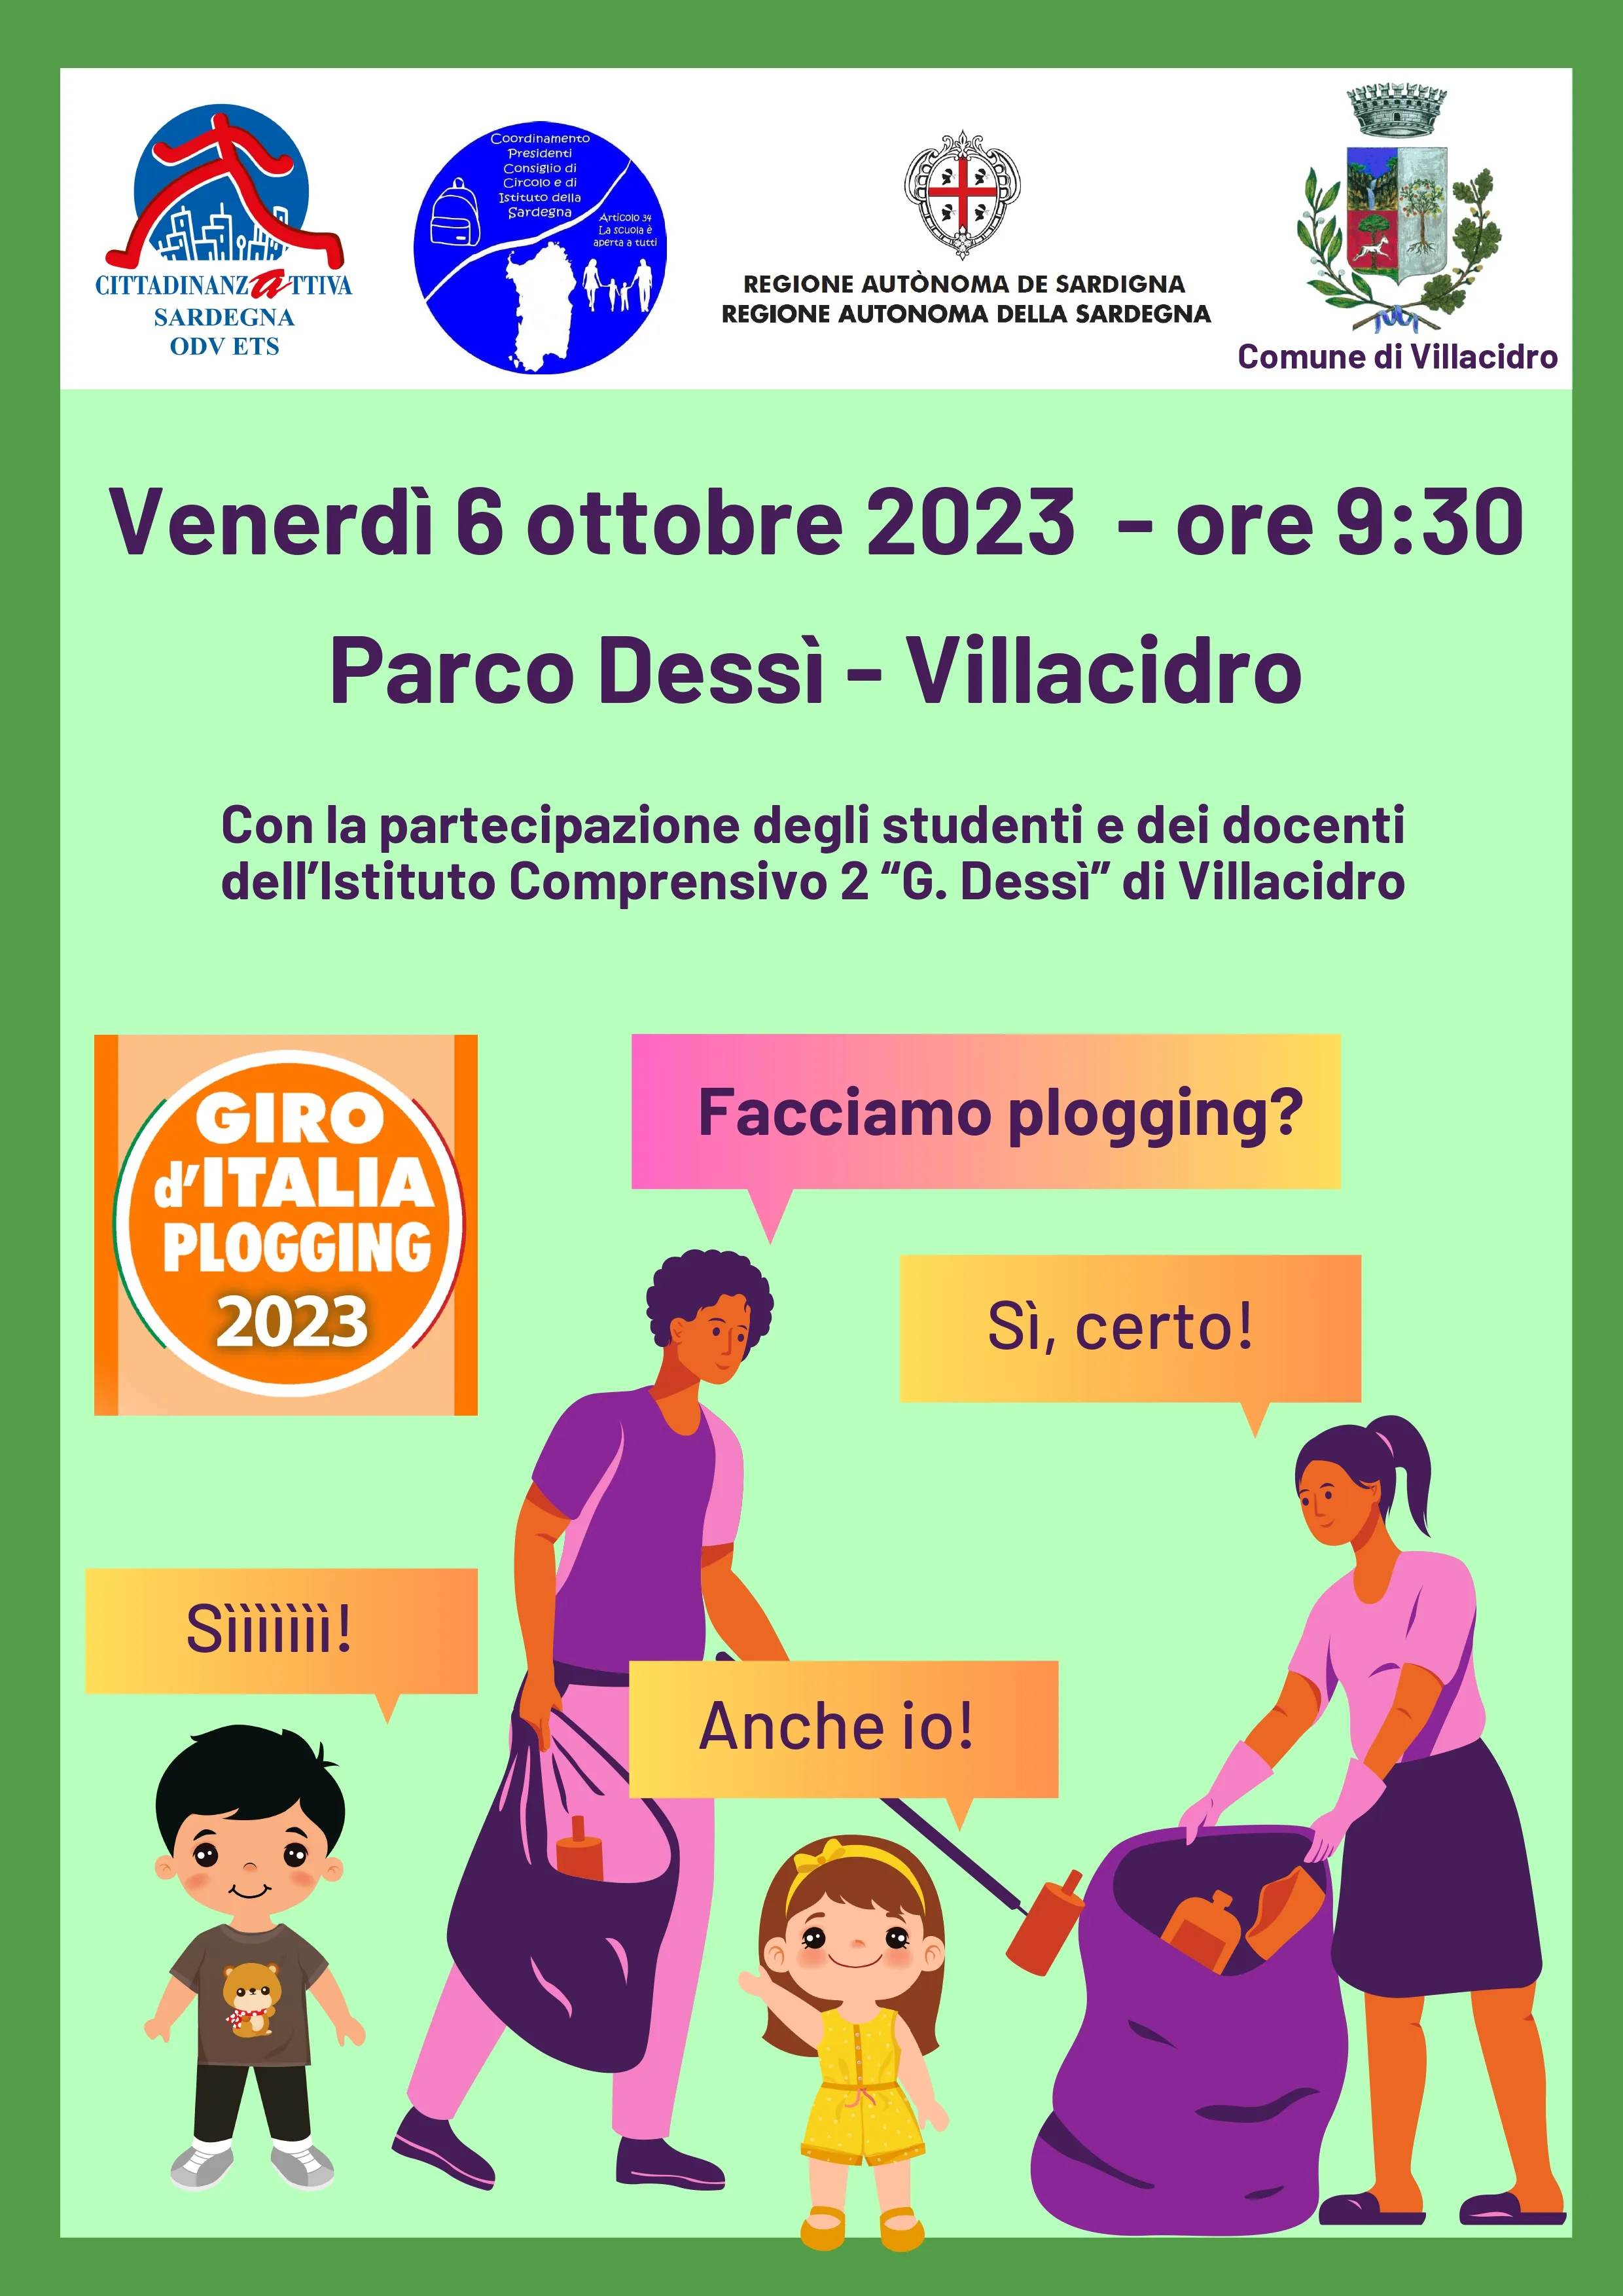 Giro d'Italia Plogging 2023 - Venerdì 6 ottobre 2023- ore 9:30 -Parco Dessì - Villacidro